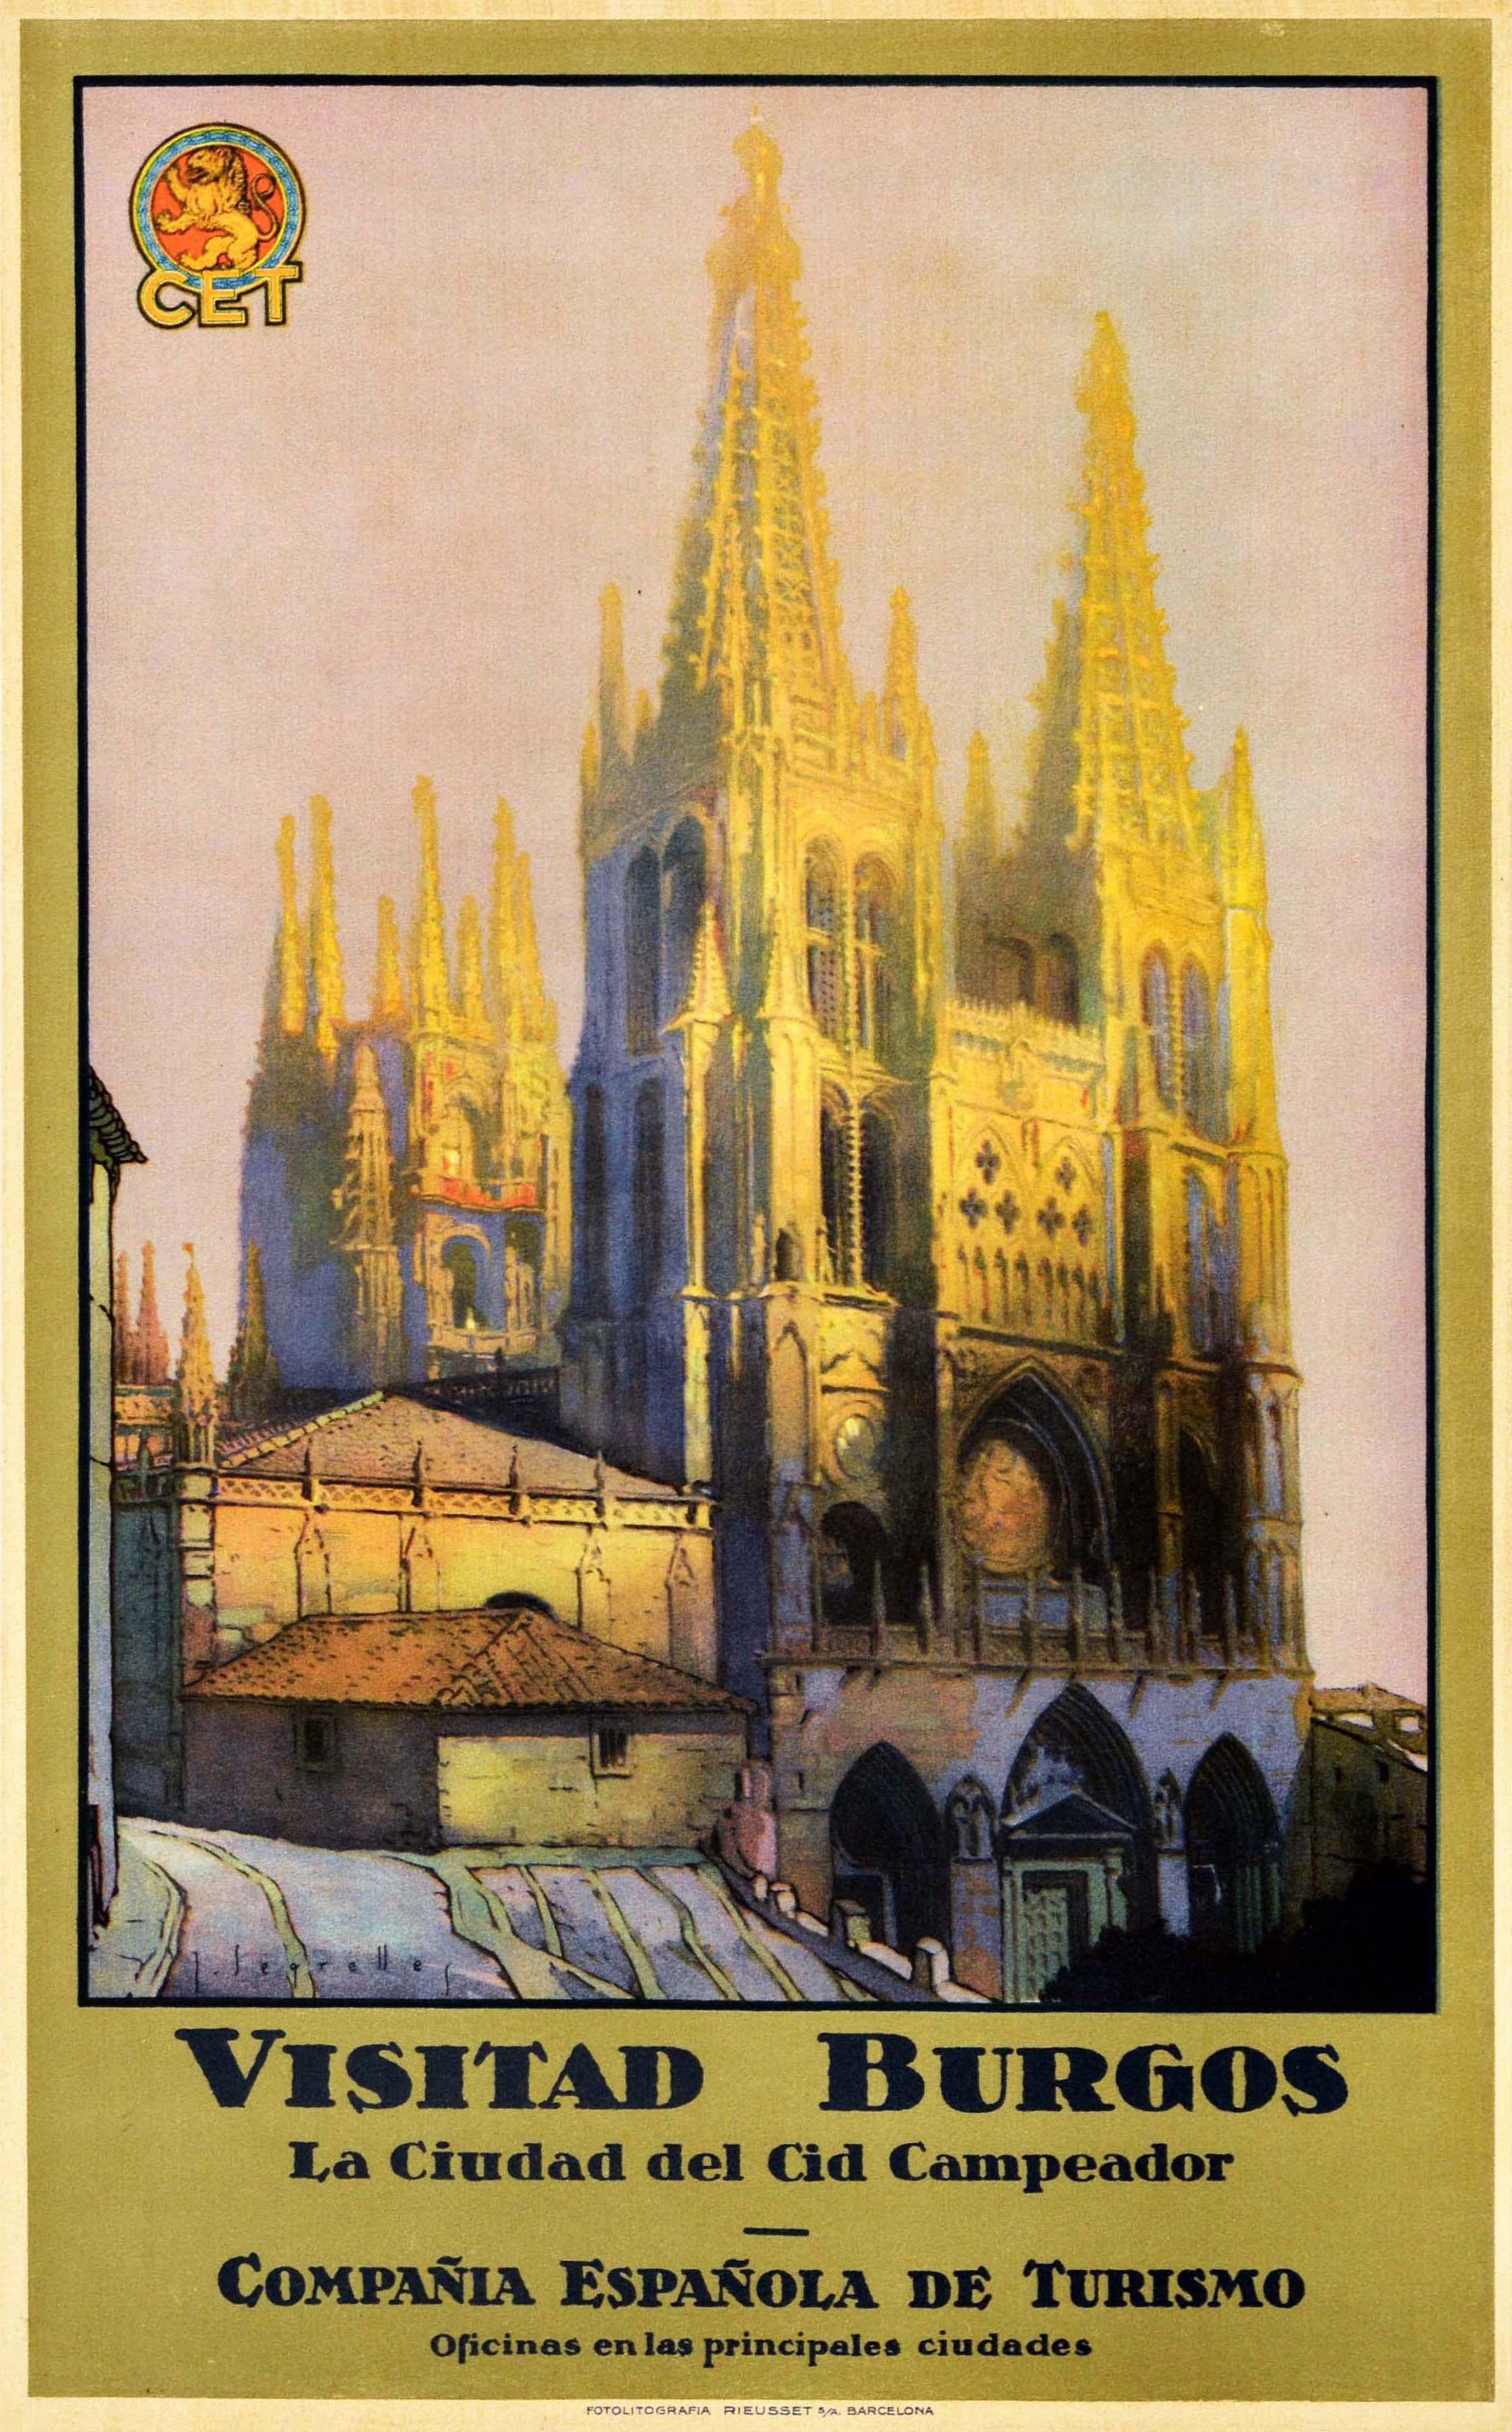 J. Segrelles Print - Original Vintage Travel Poster Visitad Burgos Cid Campeador Spain Cathedral City